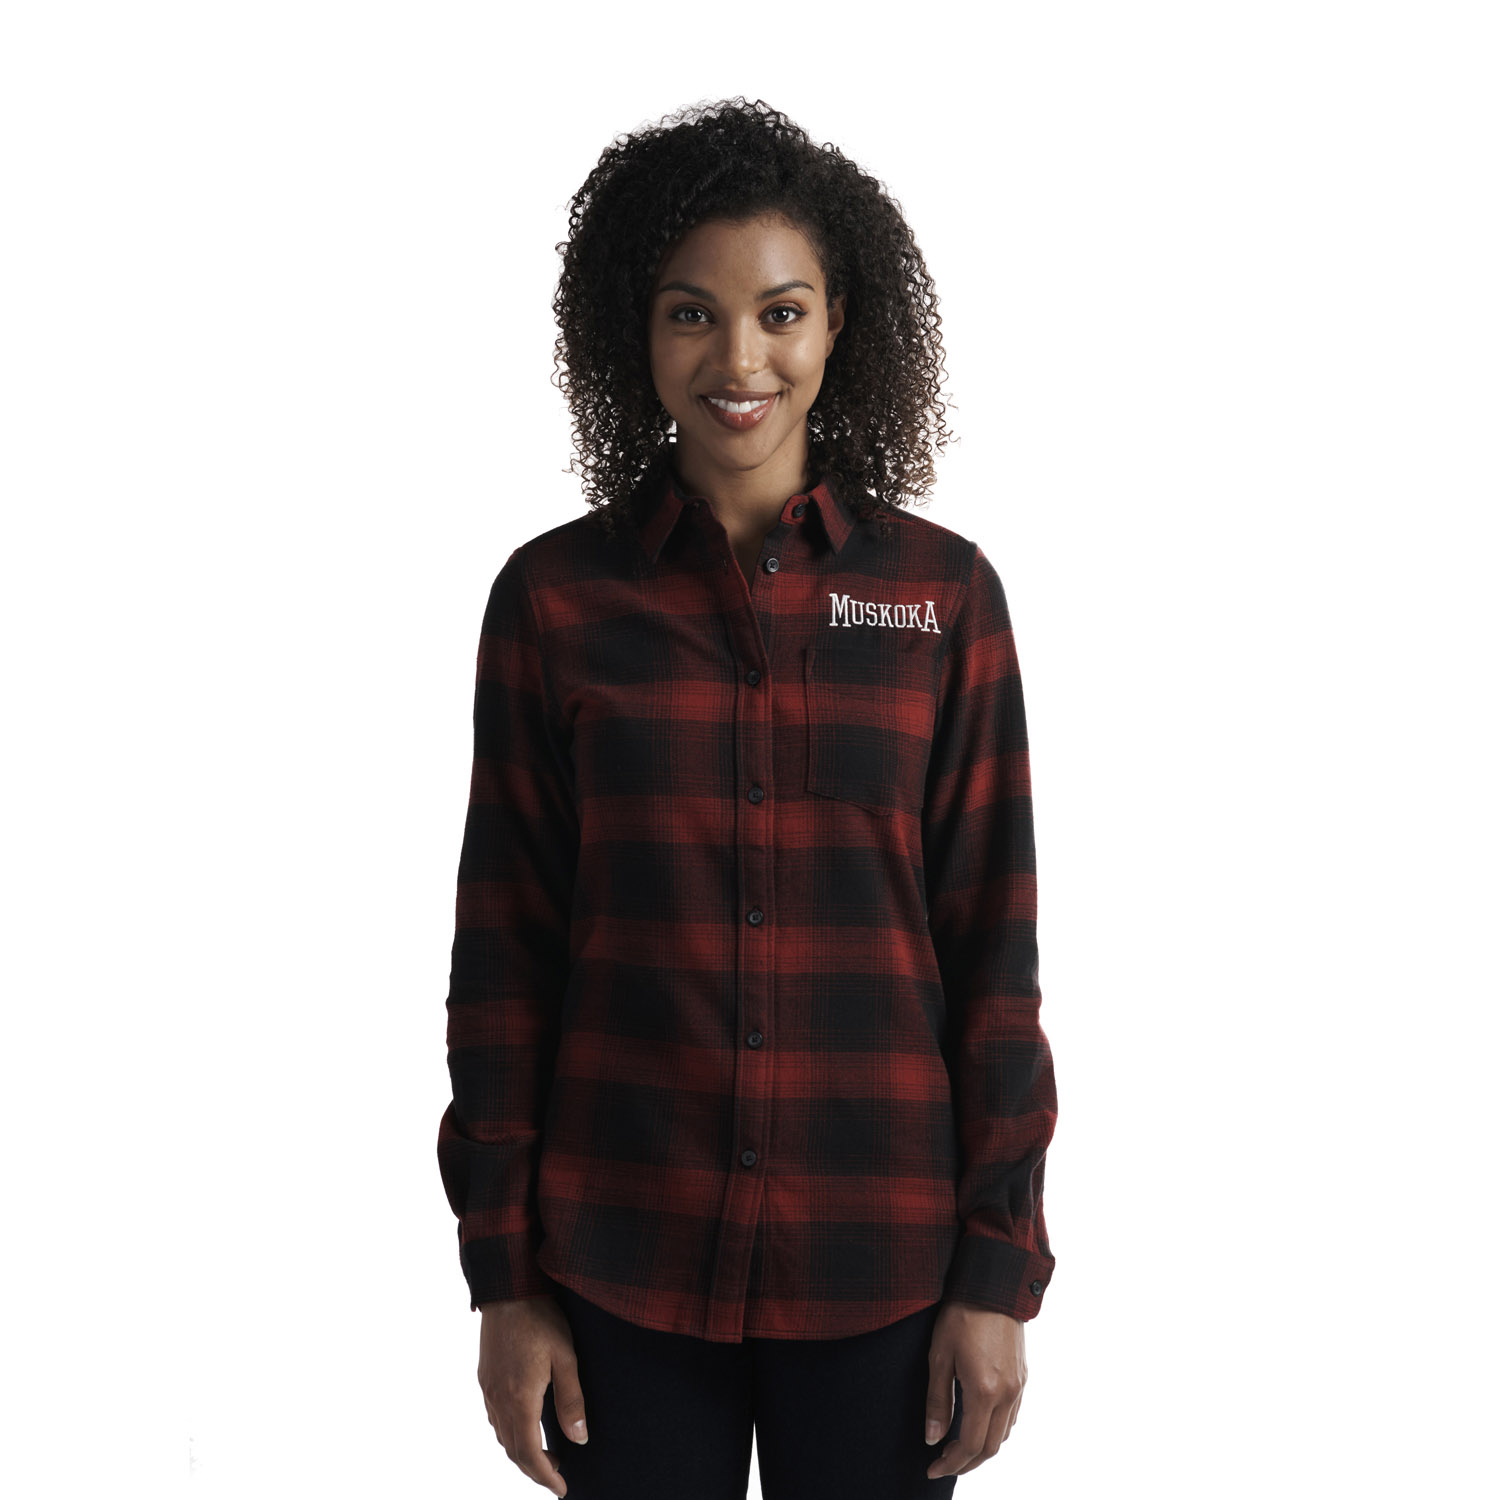 https://www.workcasualwear.ca/images/thumbs/0001711_muskoka-trail-cabin-womens-brushed-flannel-shirt.jpeg